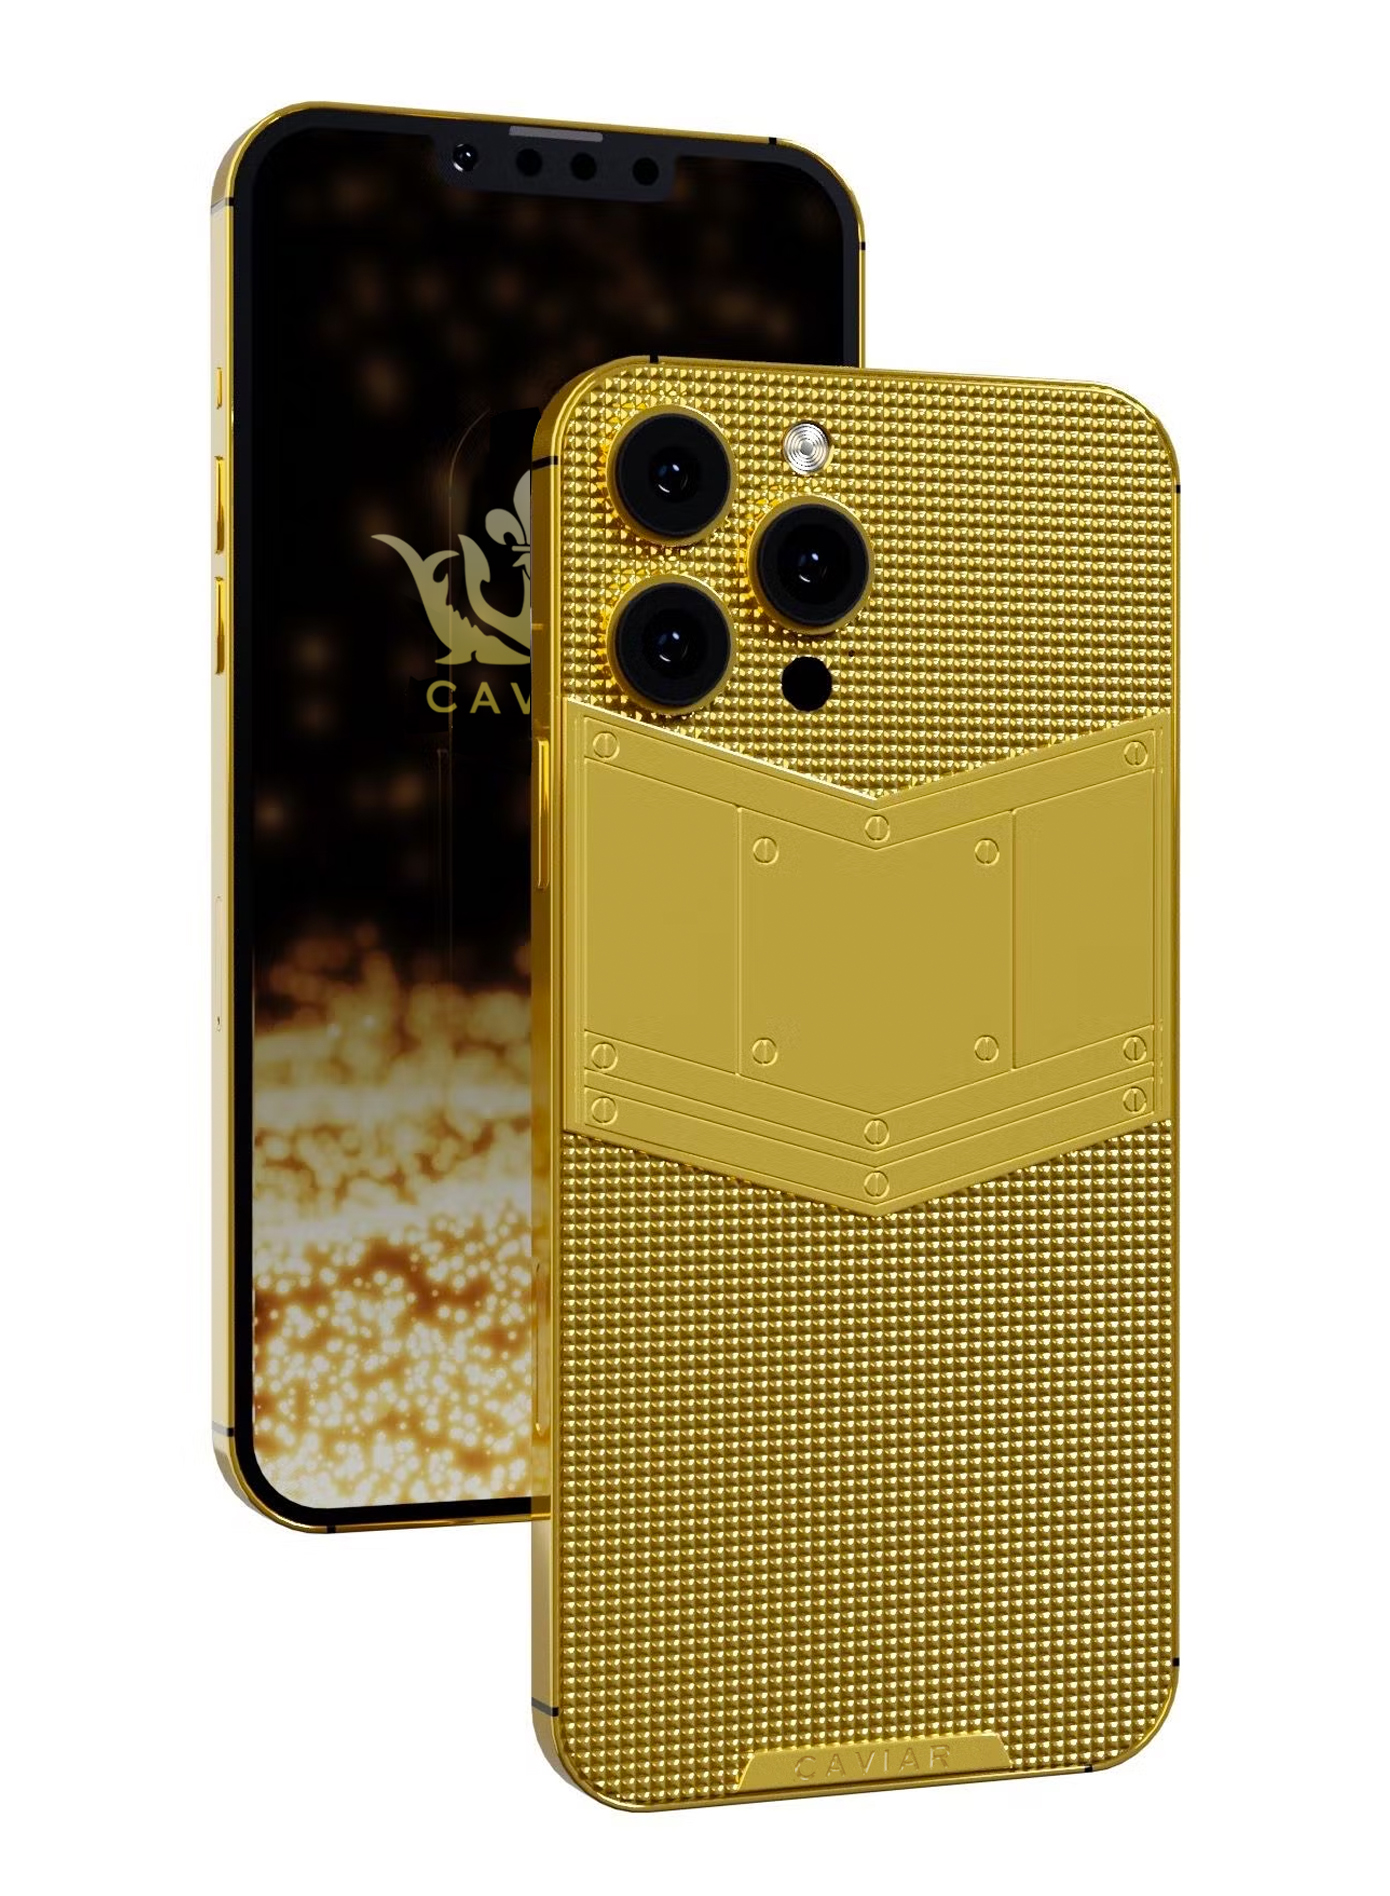 Caviar Luxury 24K Gold Customized iPhone 14 Pro Limited Edition 128 GB